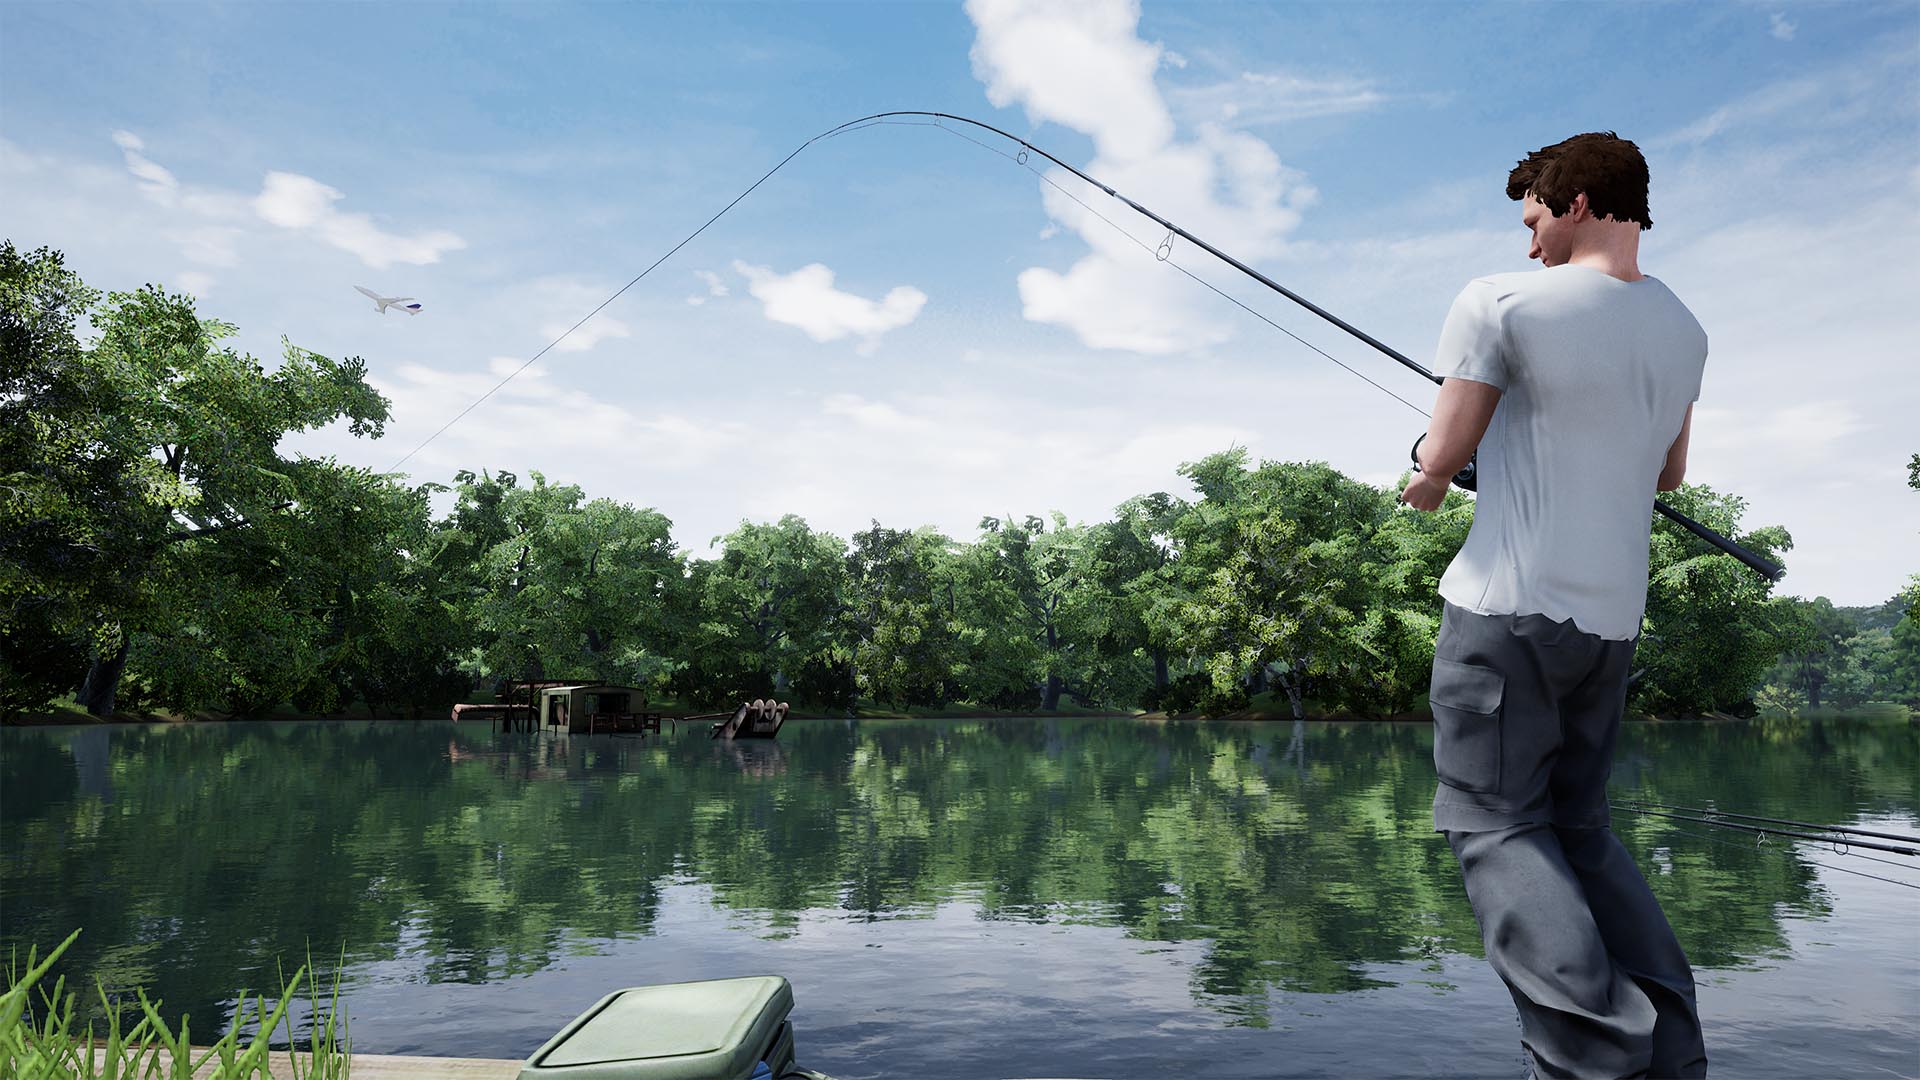 Fishing Sim World®: Pro Tour - Tackle Box Equipment Pack